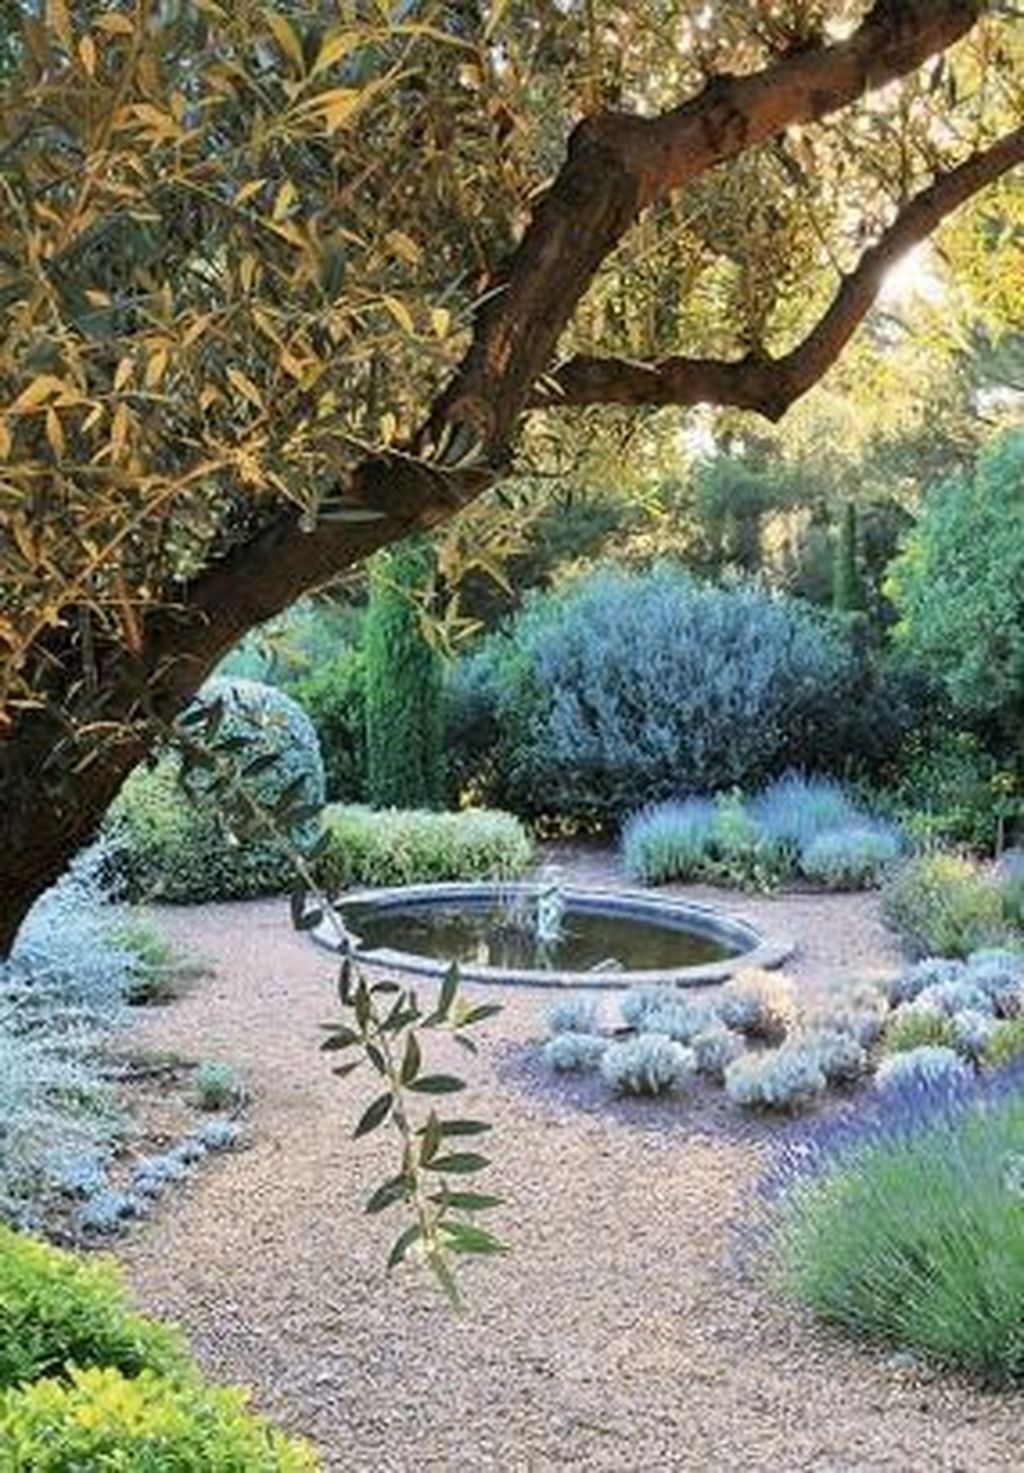 12 garden design Mediterranean backyards ideas